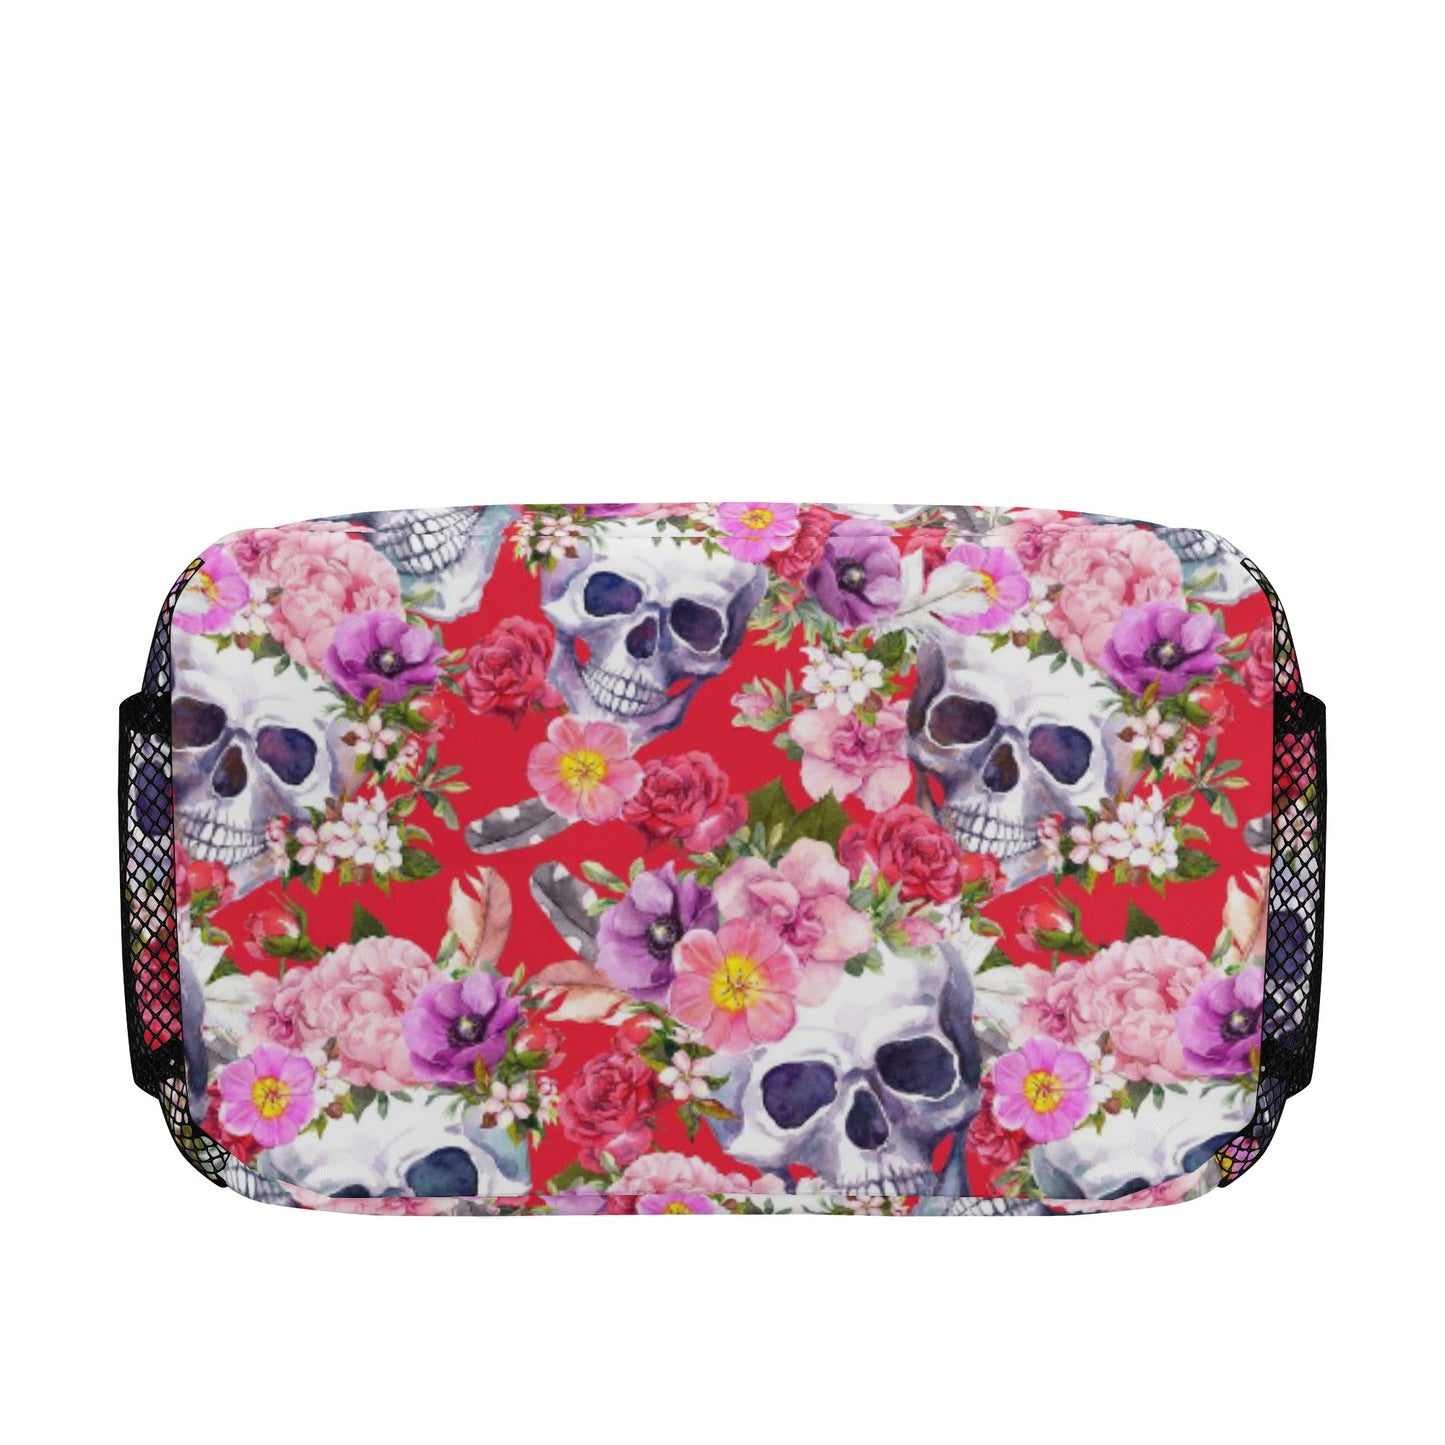 All Floral rose skull Over Printing Lunch Bag